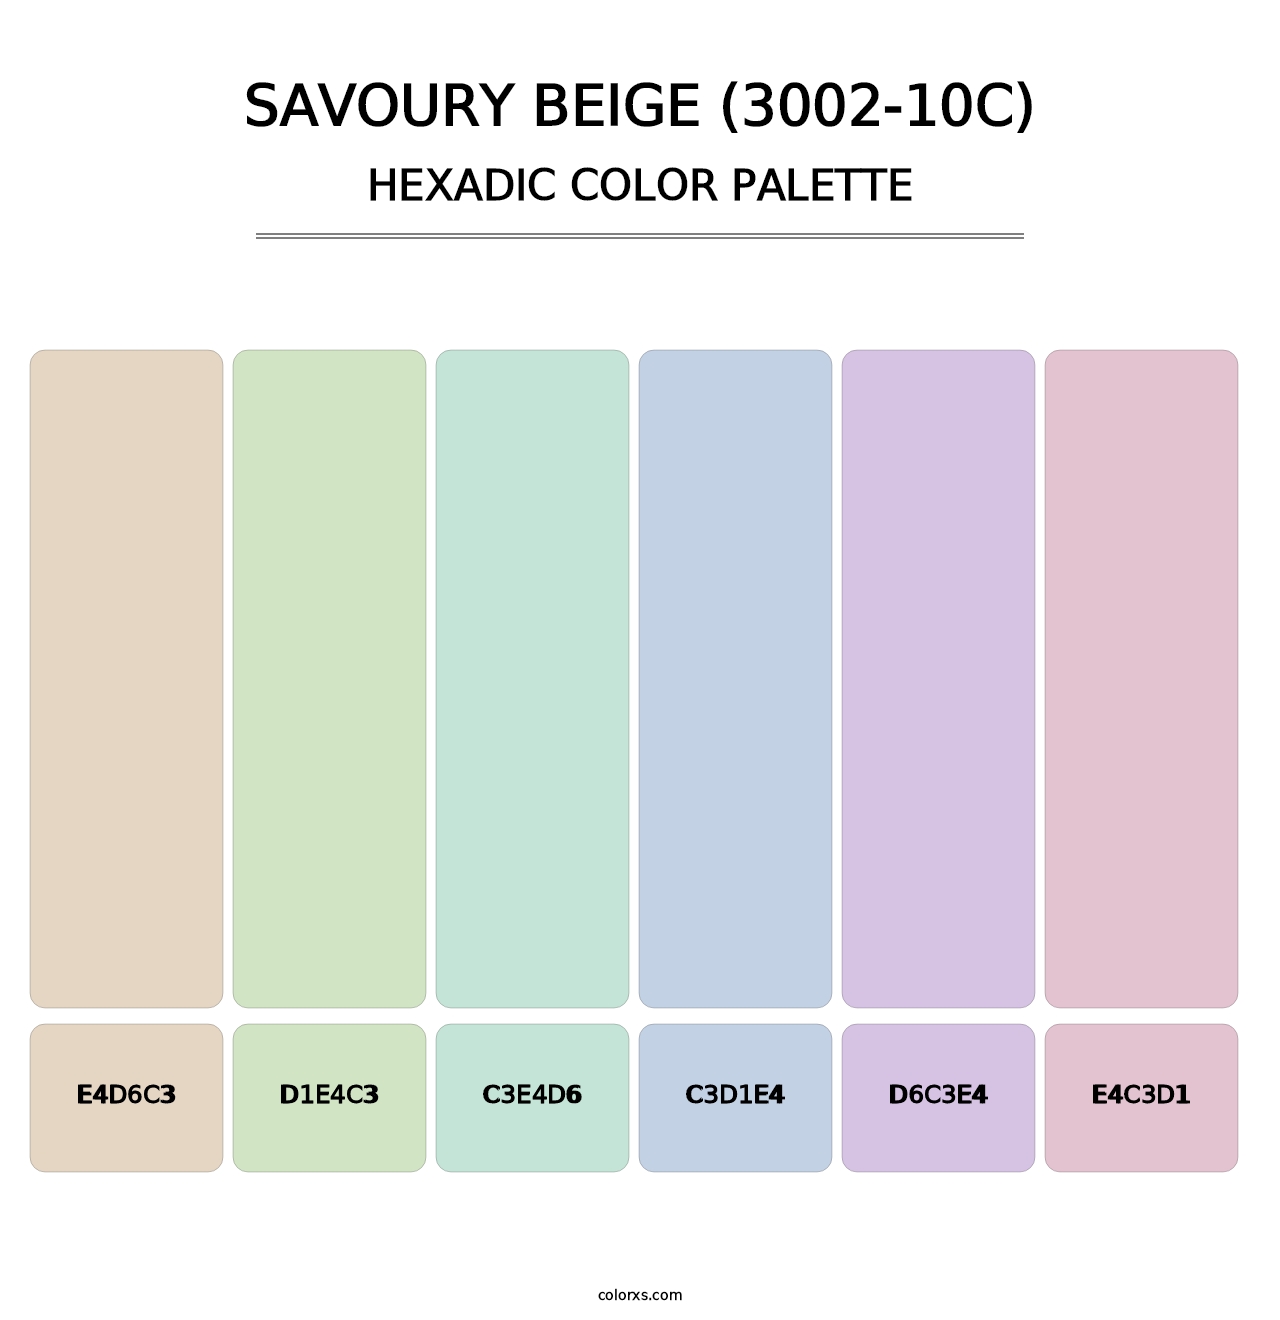 Savoury Beige (3002-10C) - Hexadic Color Palette